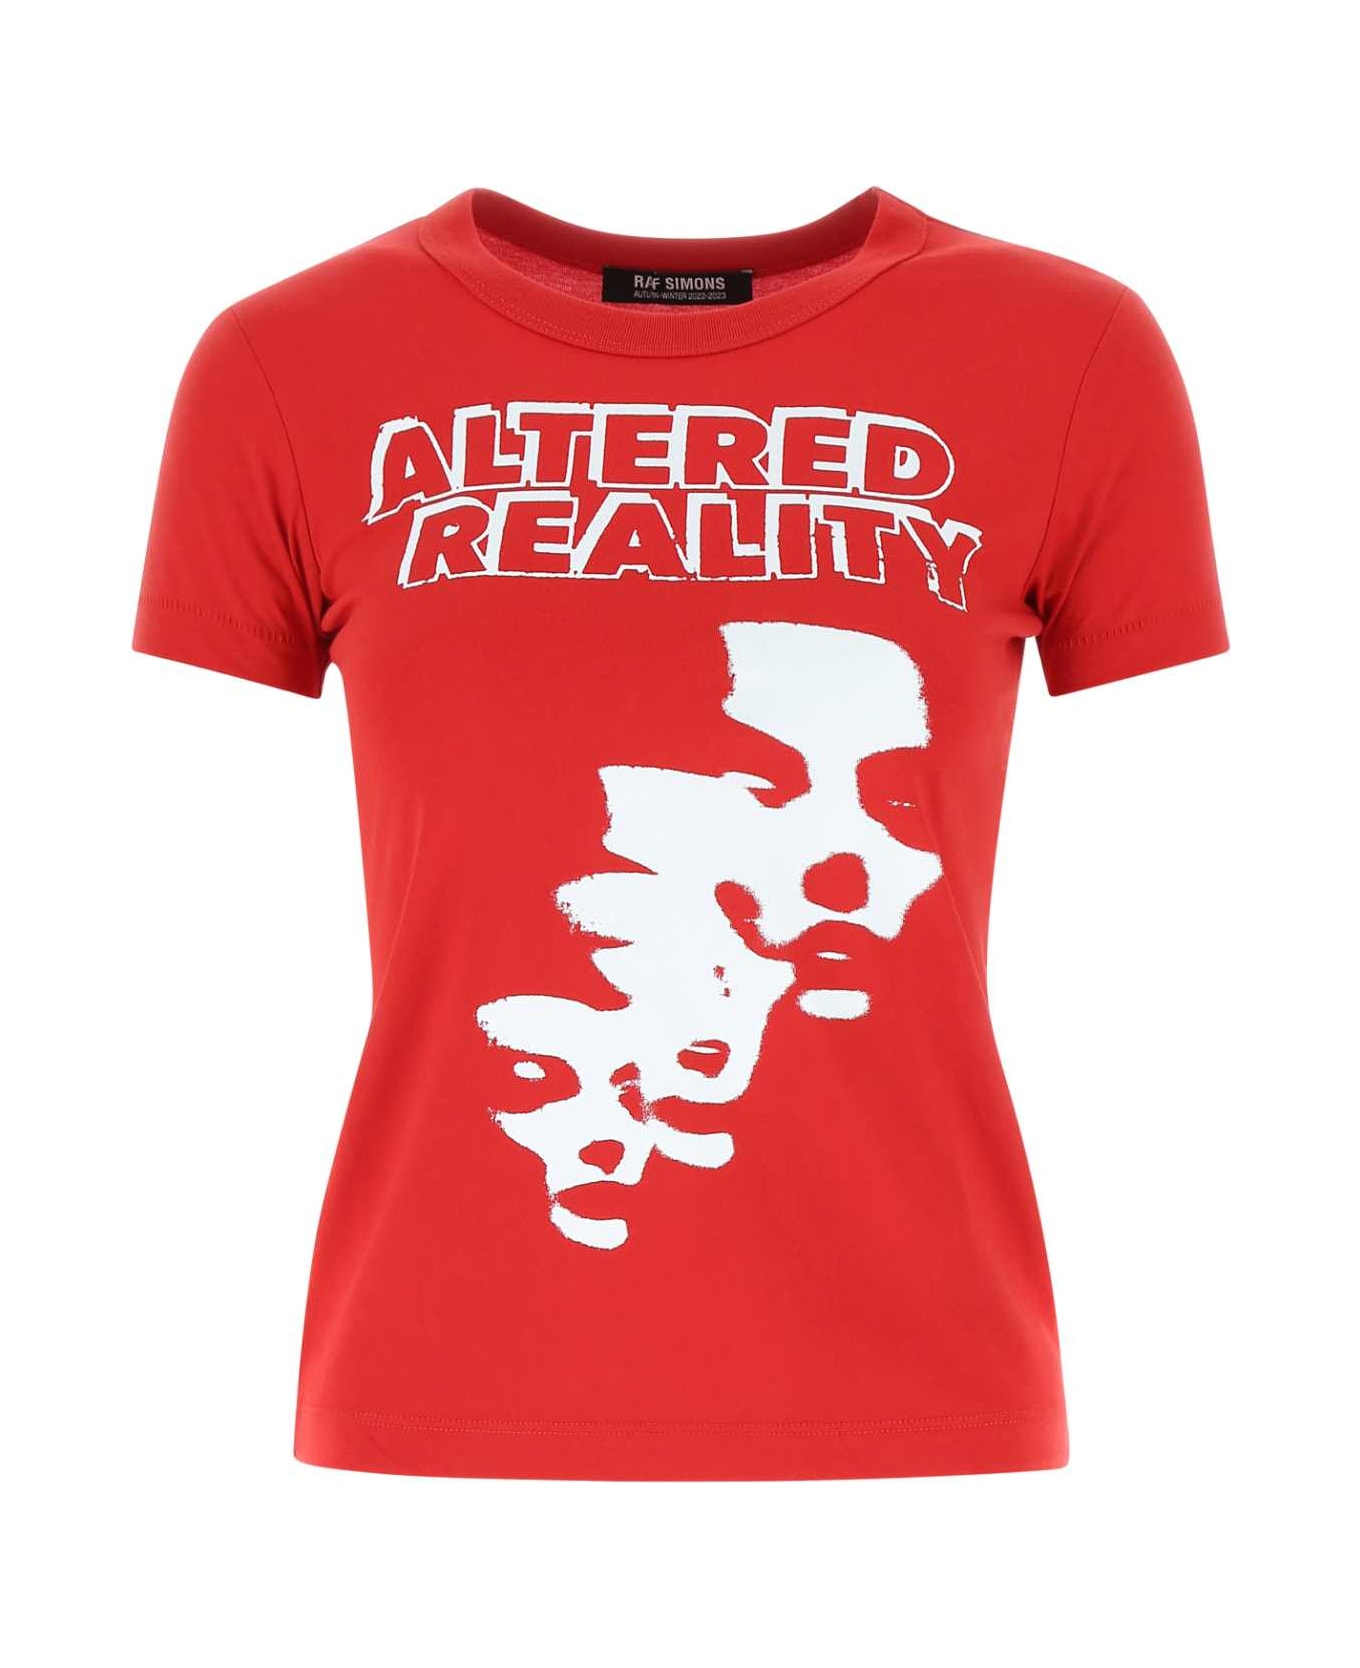 Raf Simons Red Cotton T-shirt - 0030